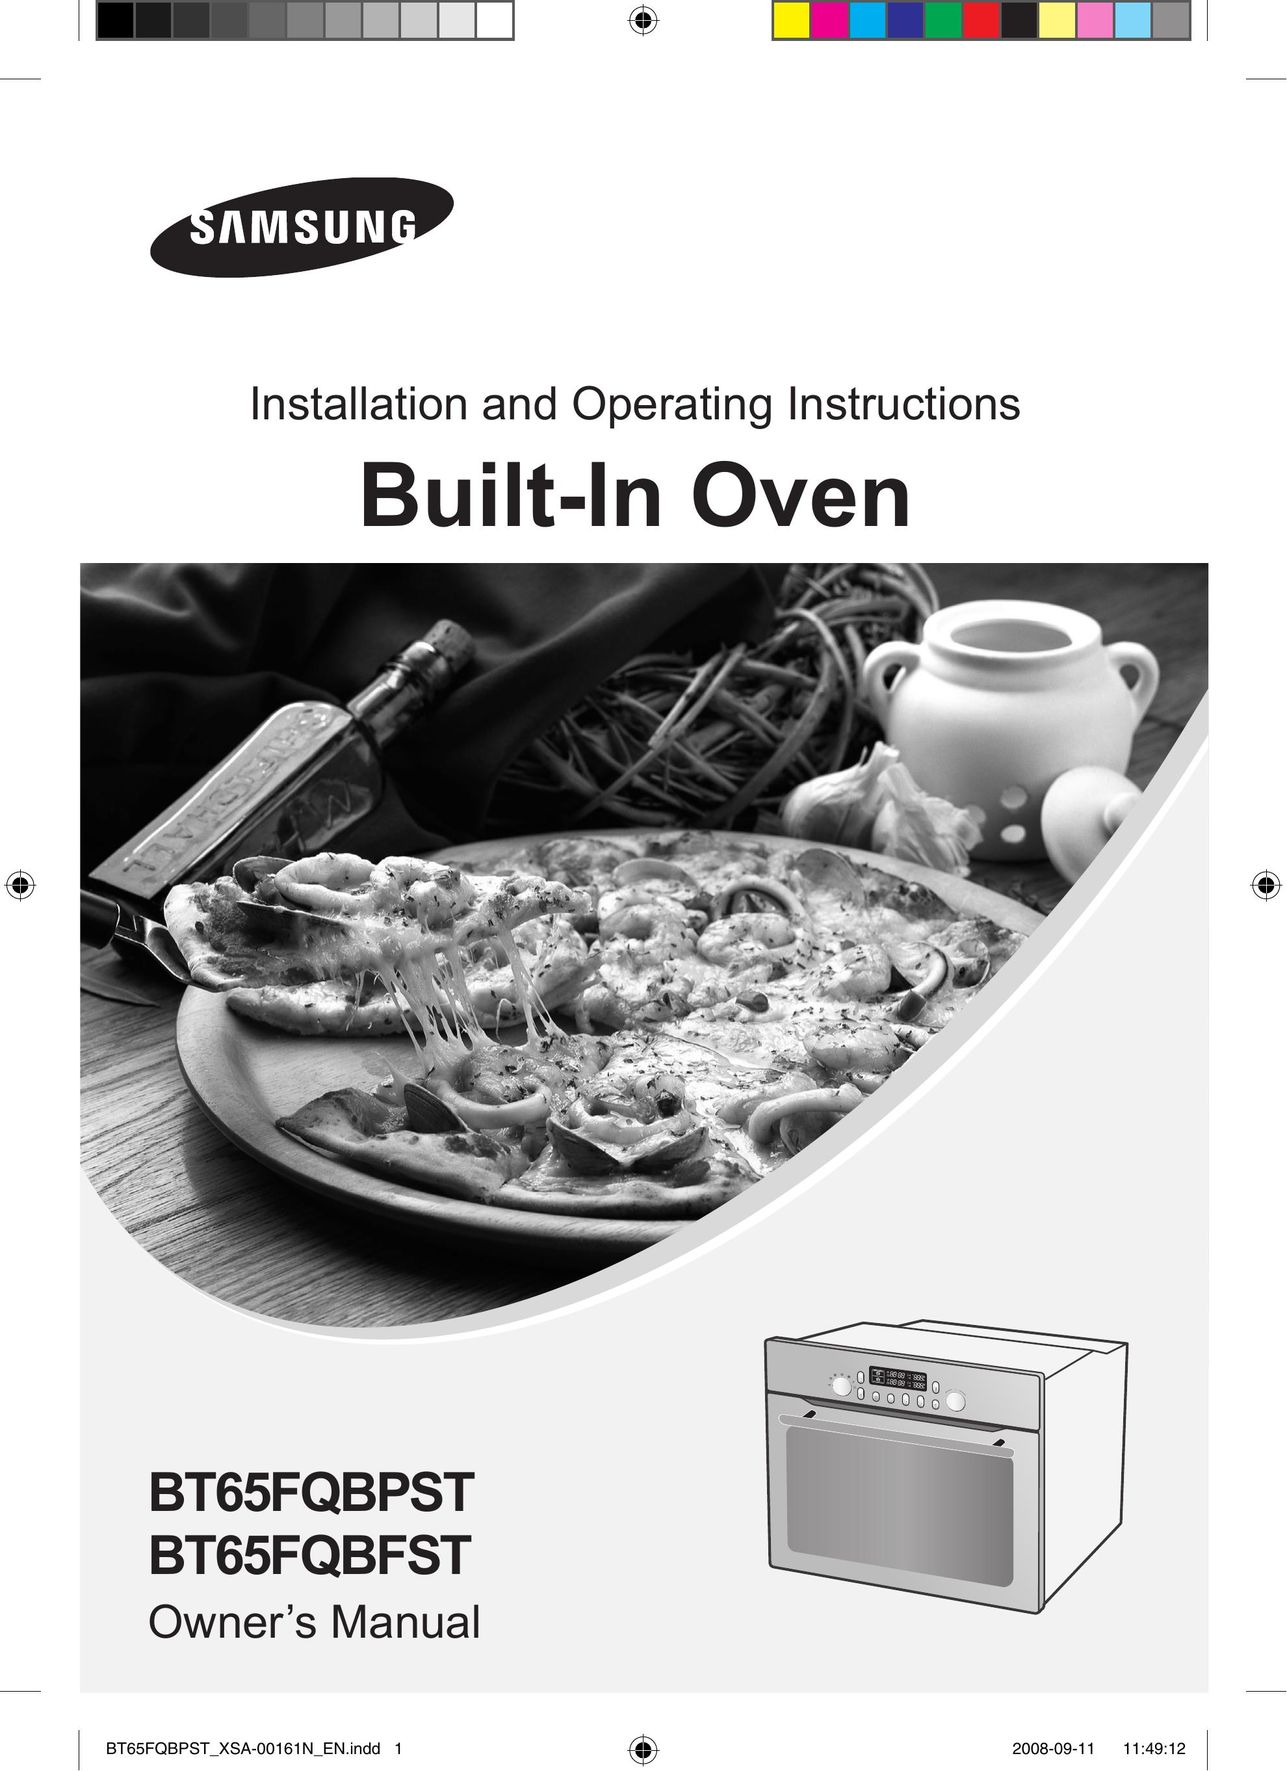 Samsung BT65FQBPST Oven User Manual